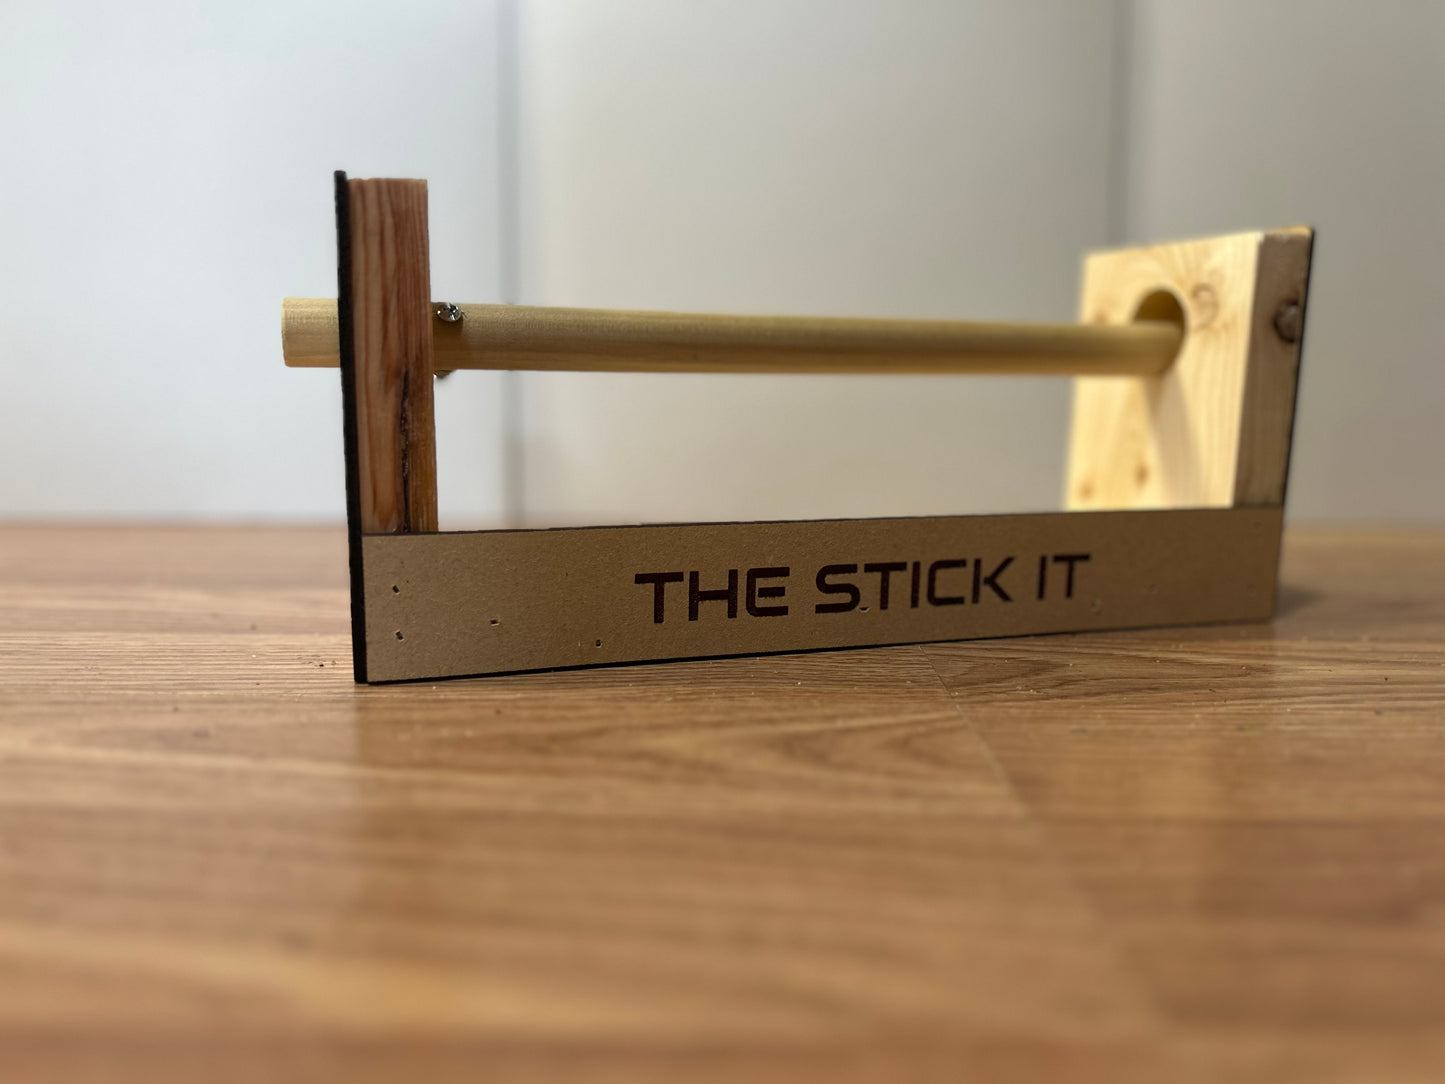 The Stick it